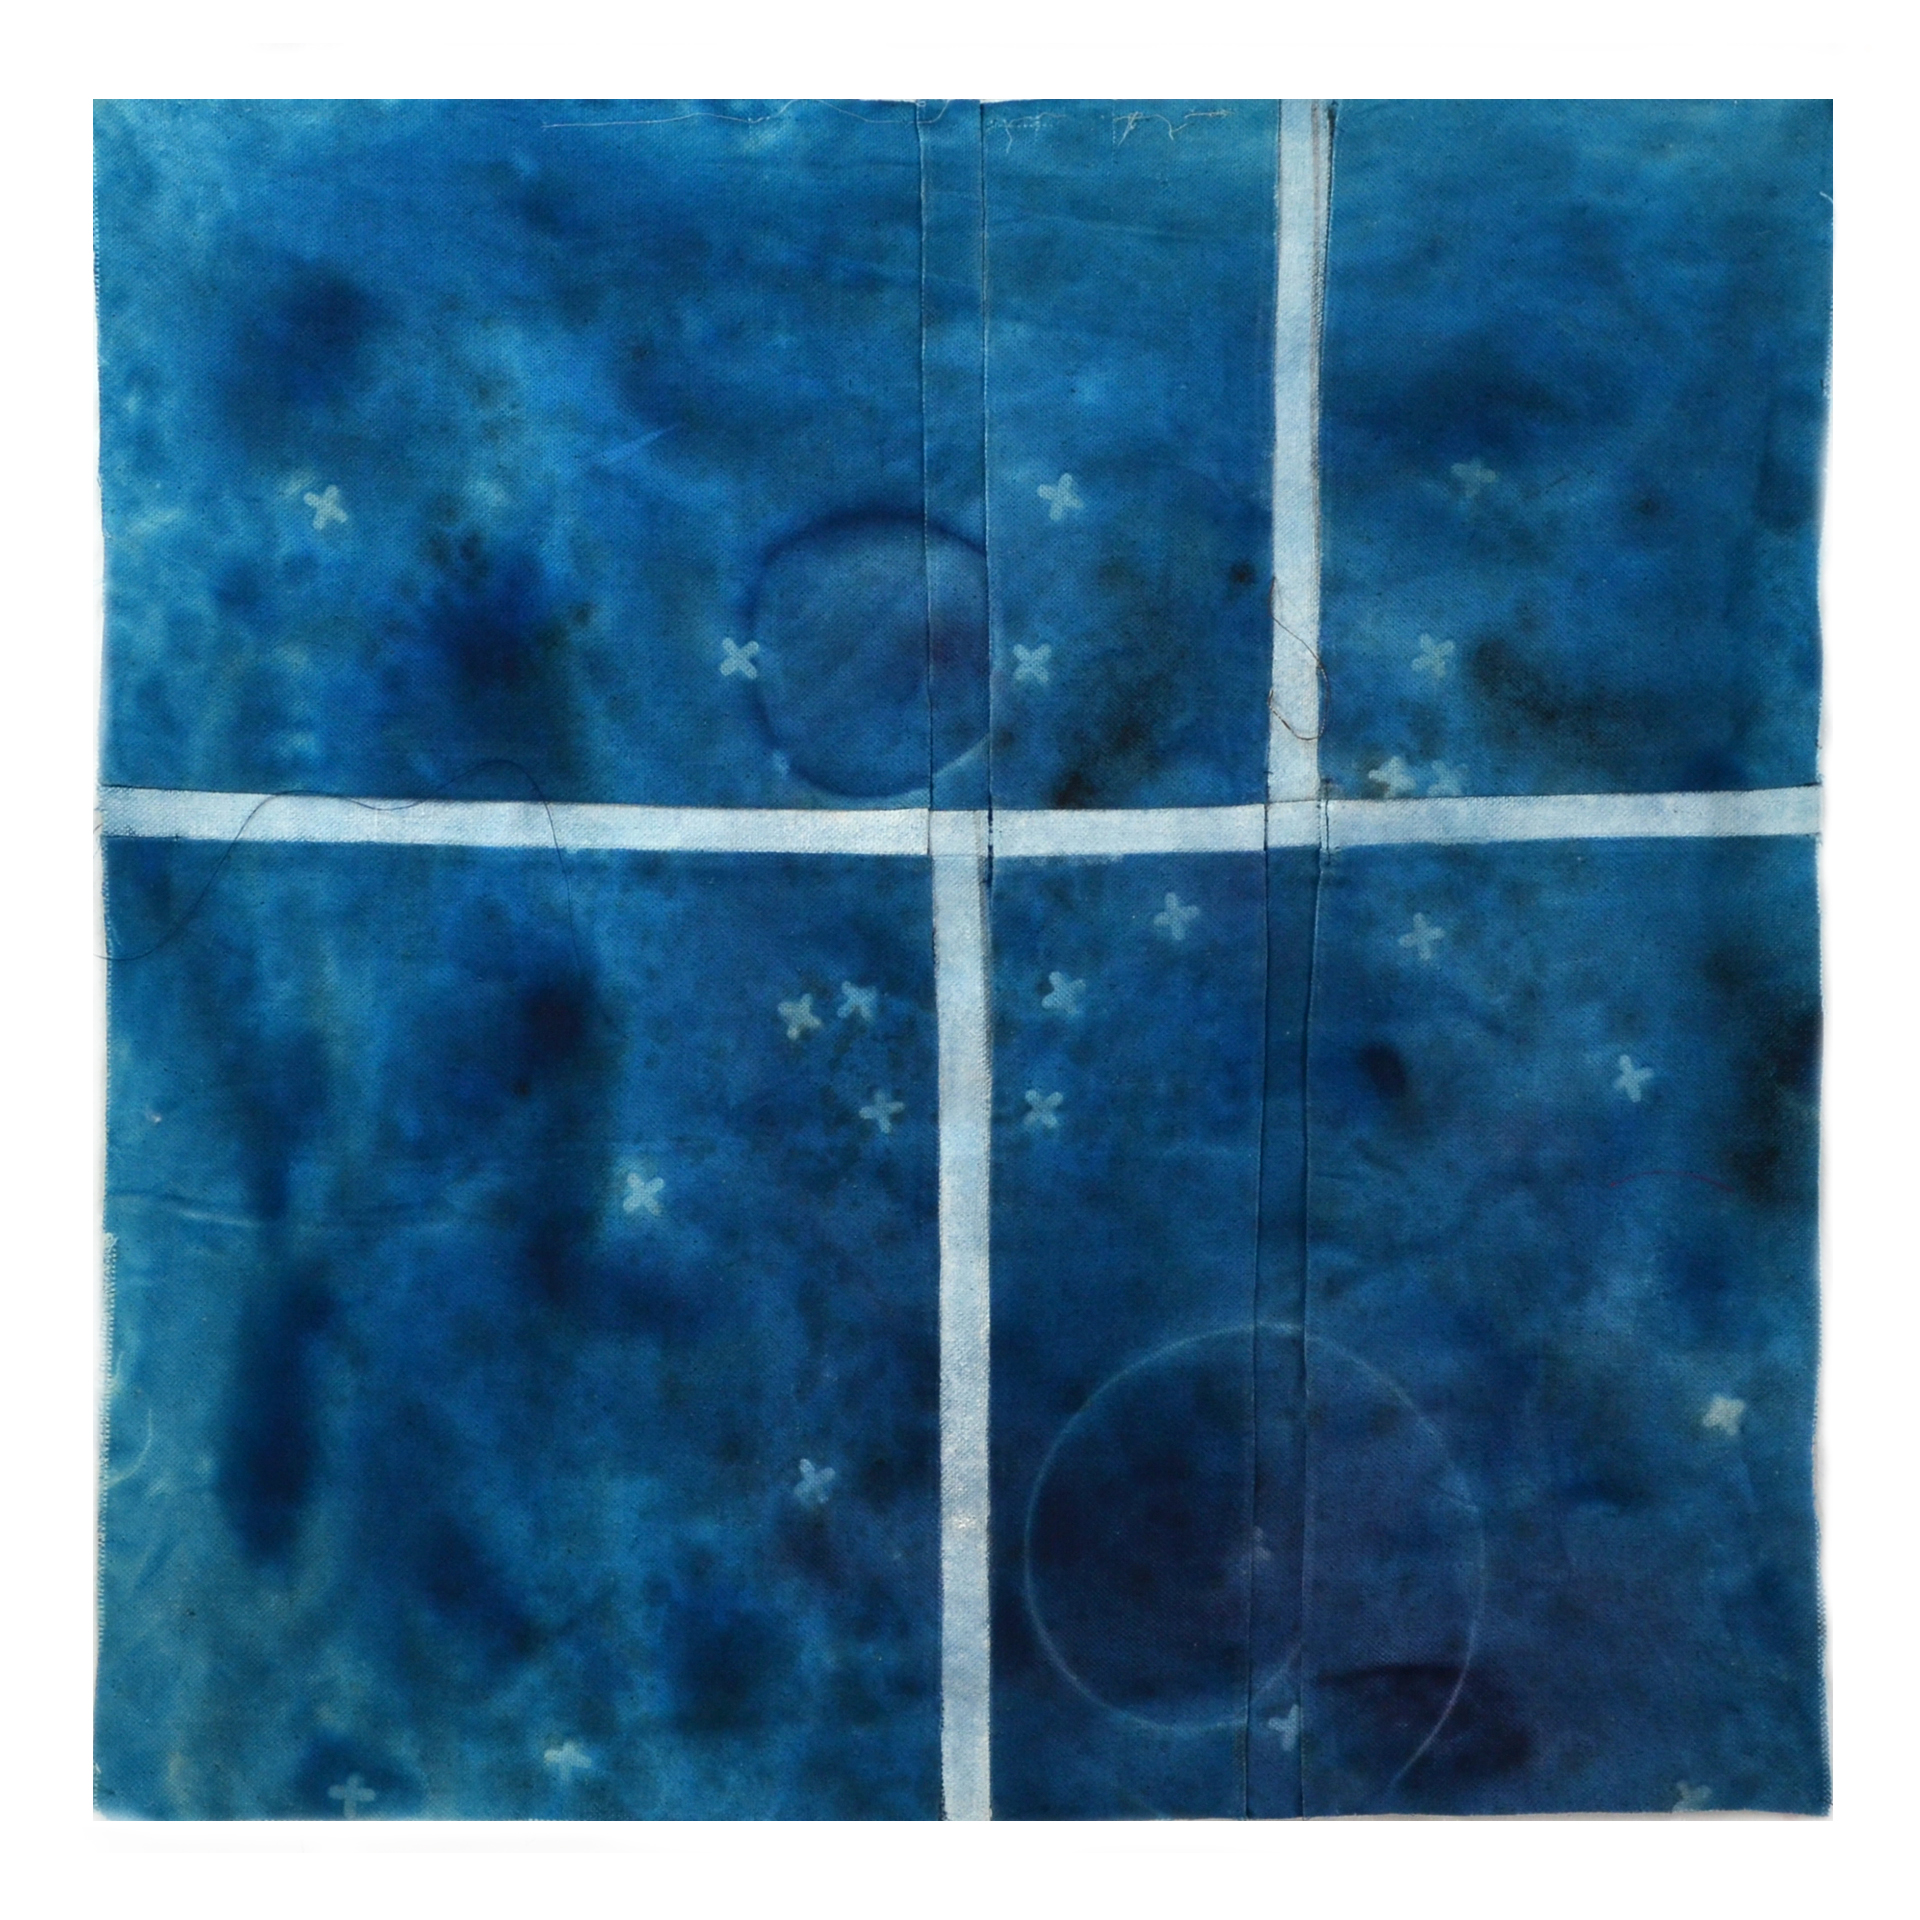 Willis, Joshua, "Night." Cotton, Acrylic, 18"x 18", 2015